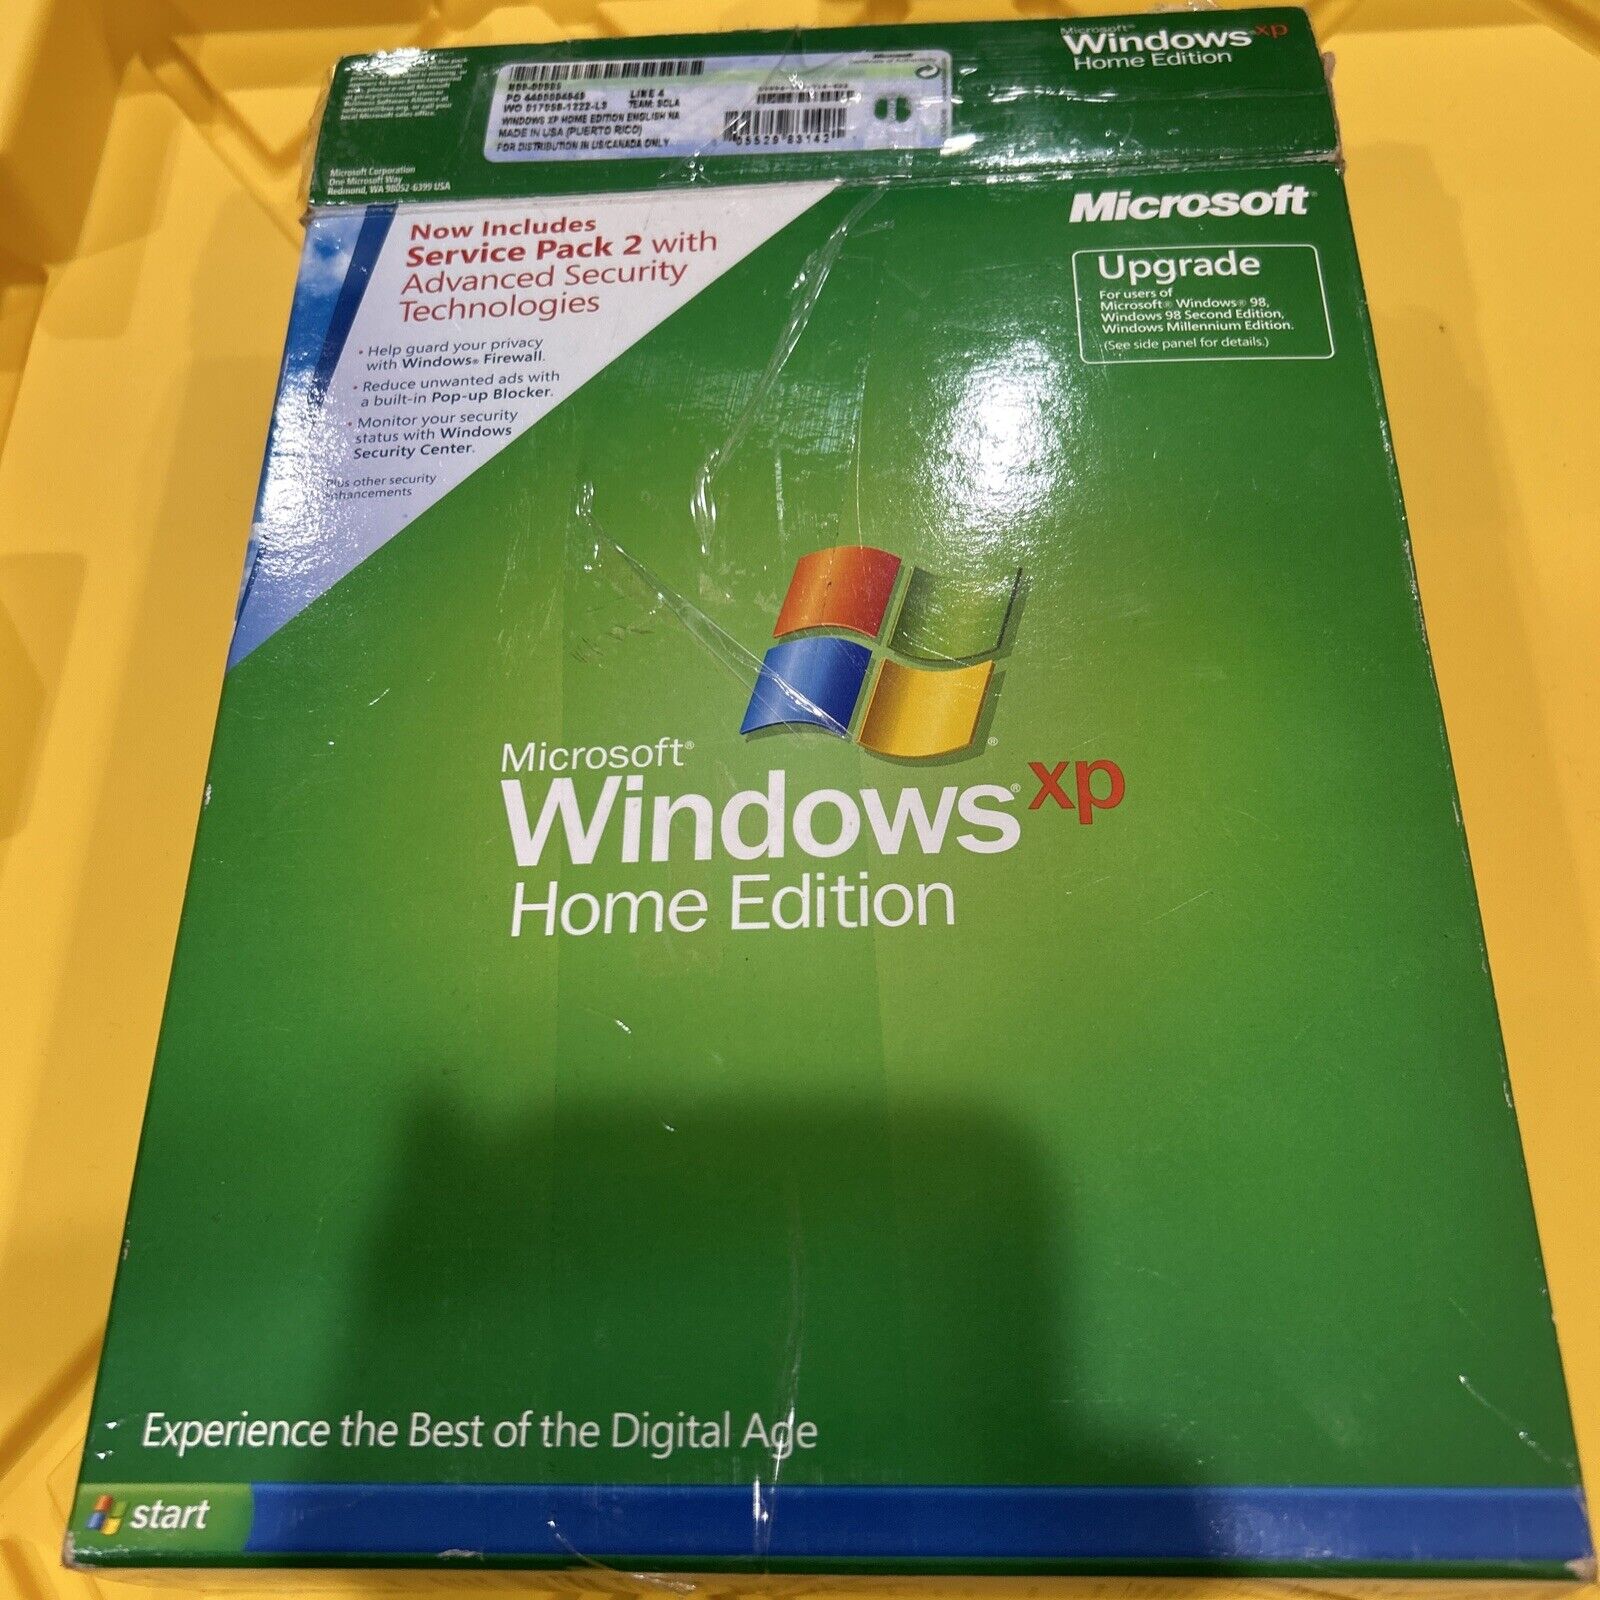 Microsoft Windows XP Home Edition Full Retail Version Product License Key